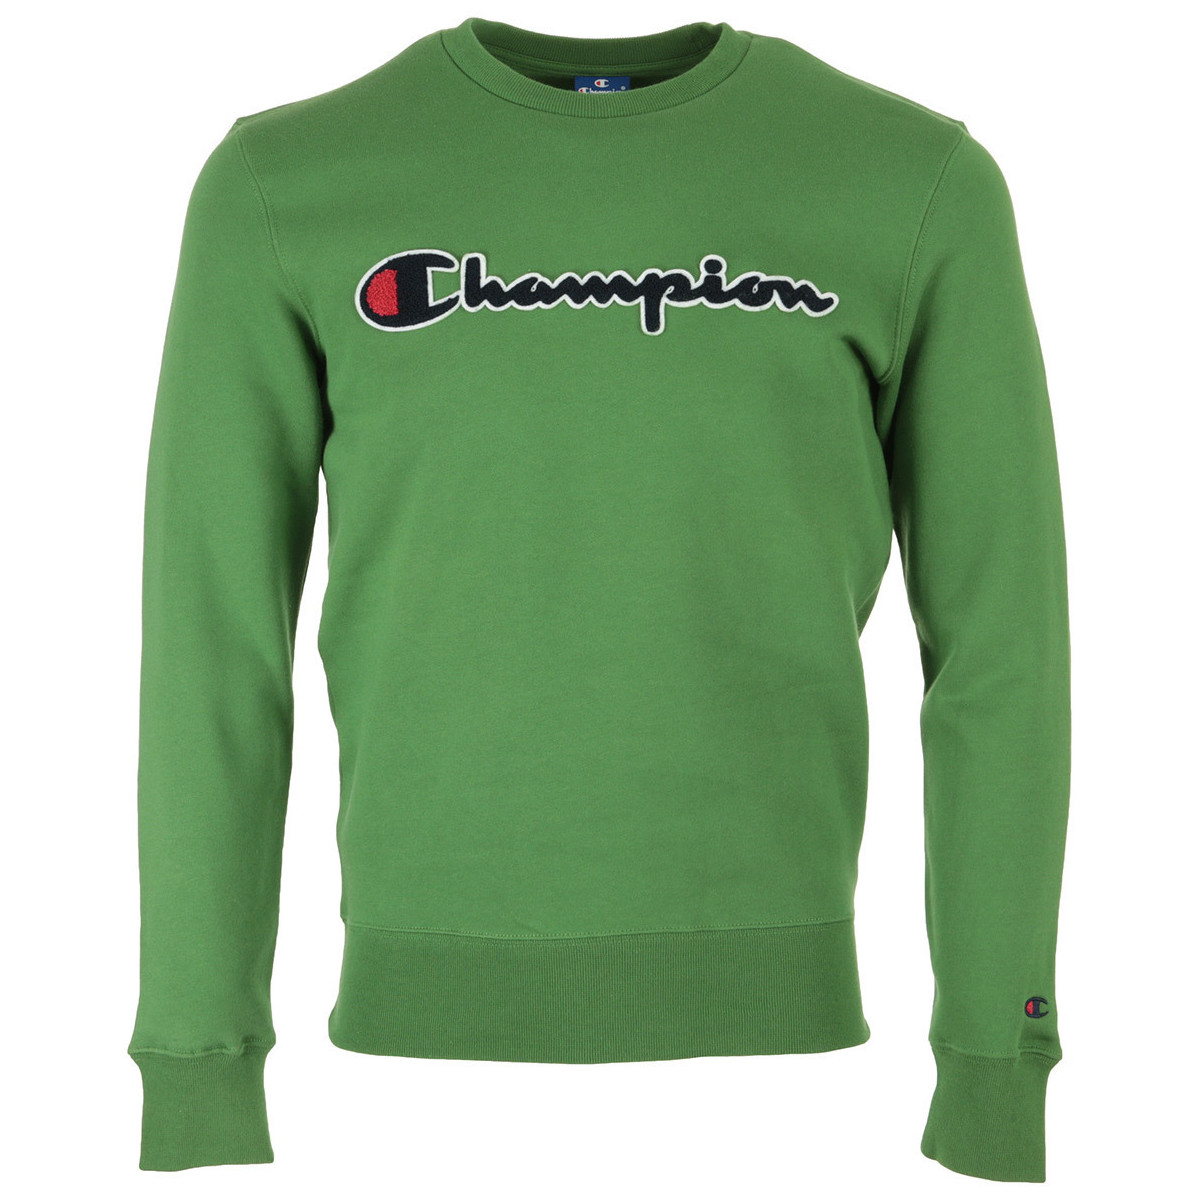 Textil Muži Mikiny Champion Crewneck Sweatshirt Zelená